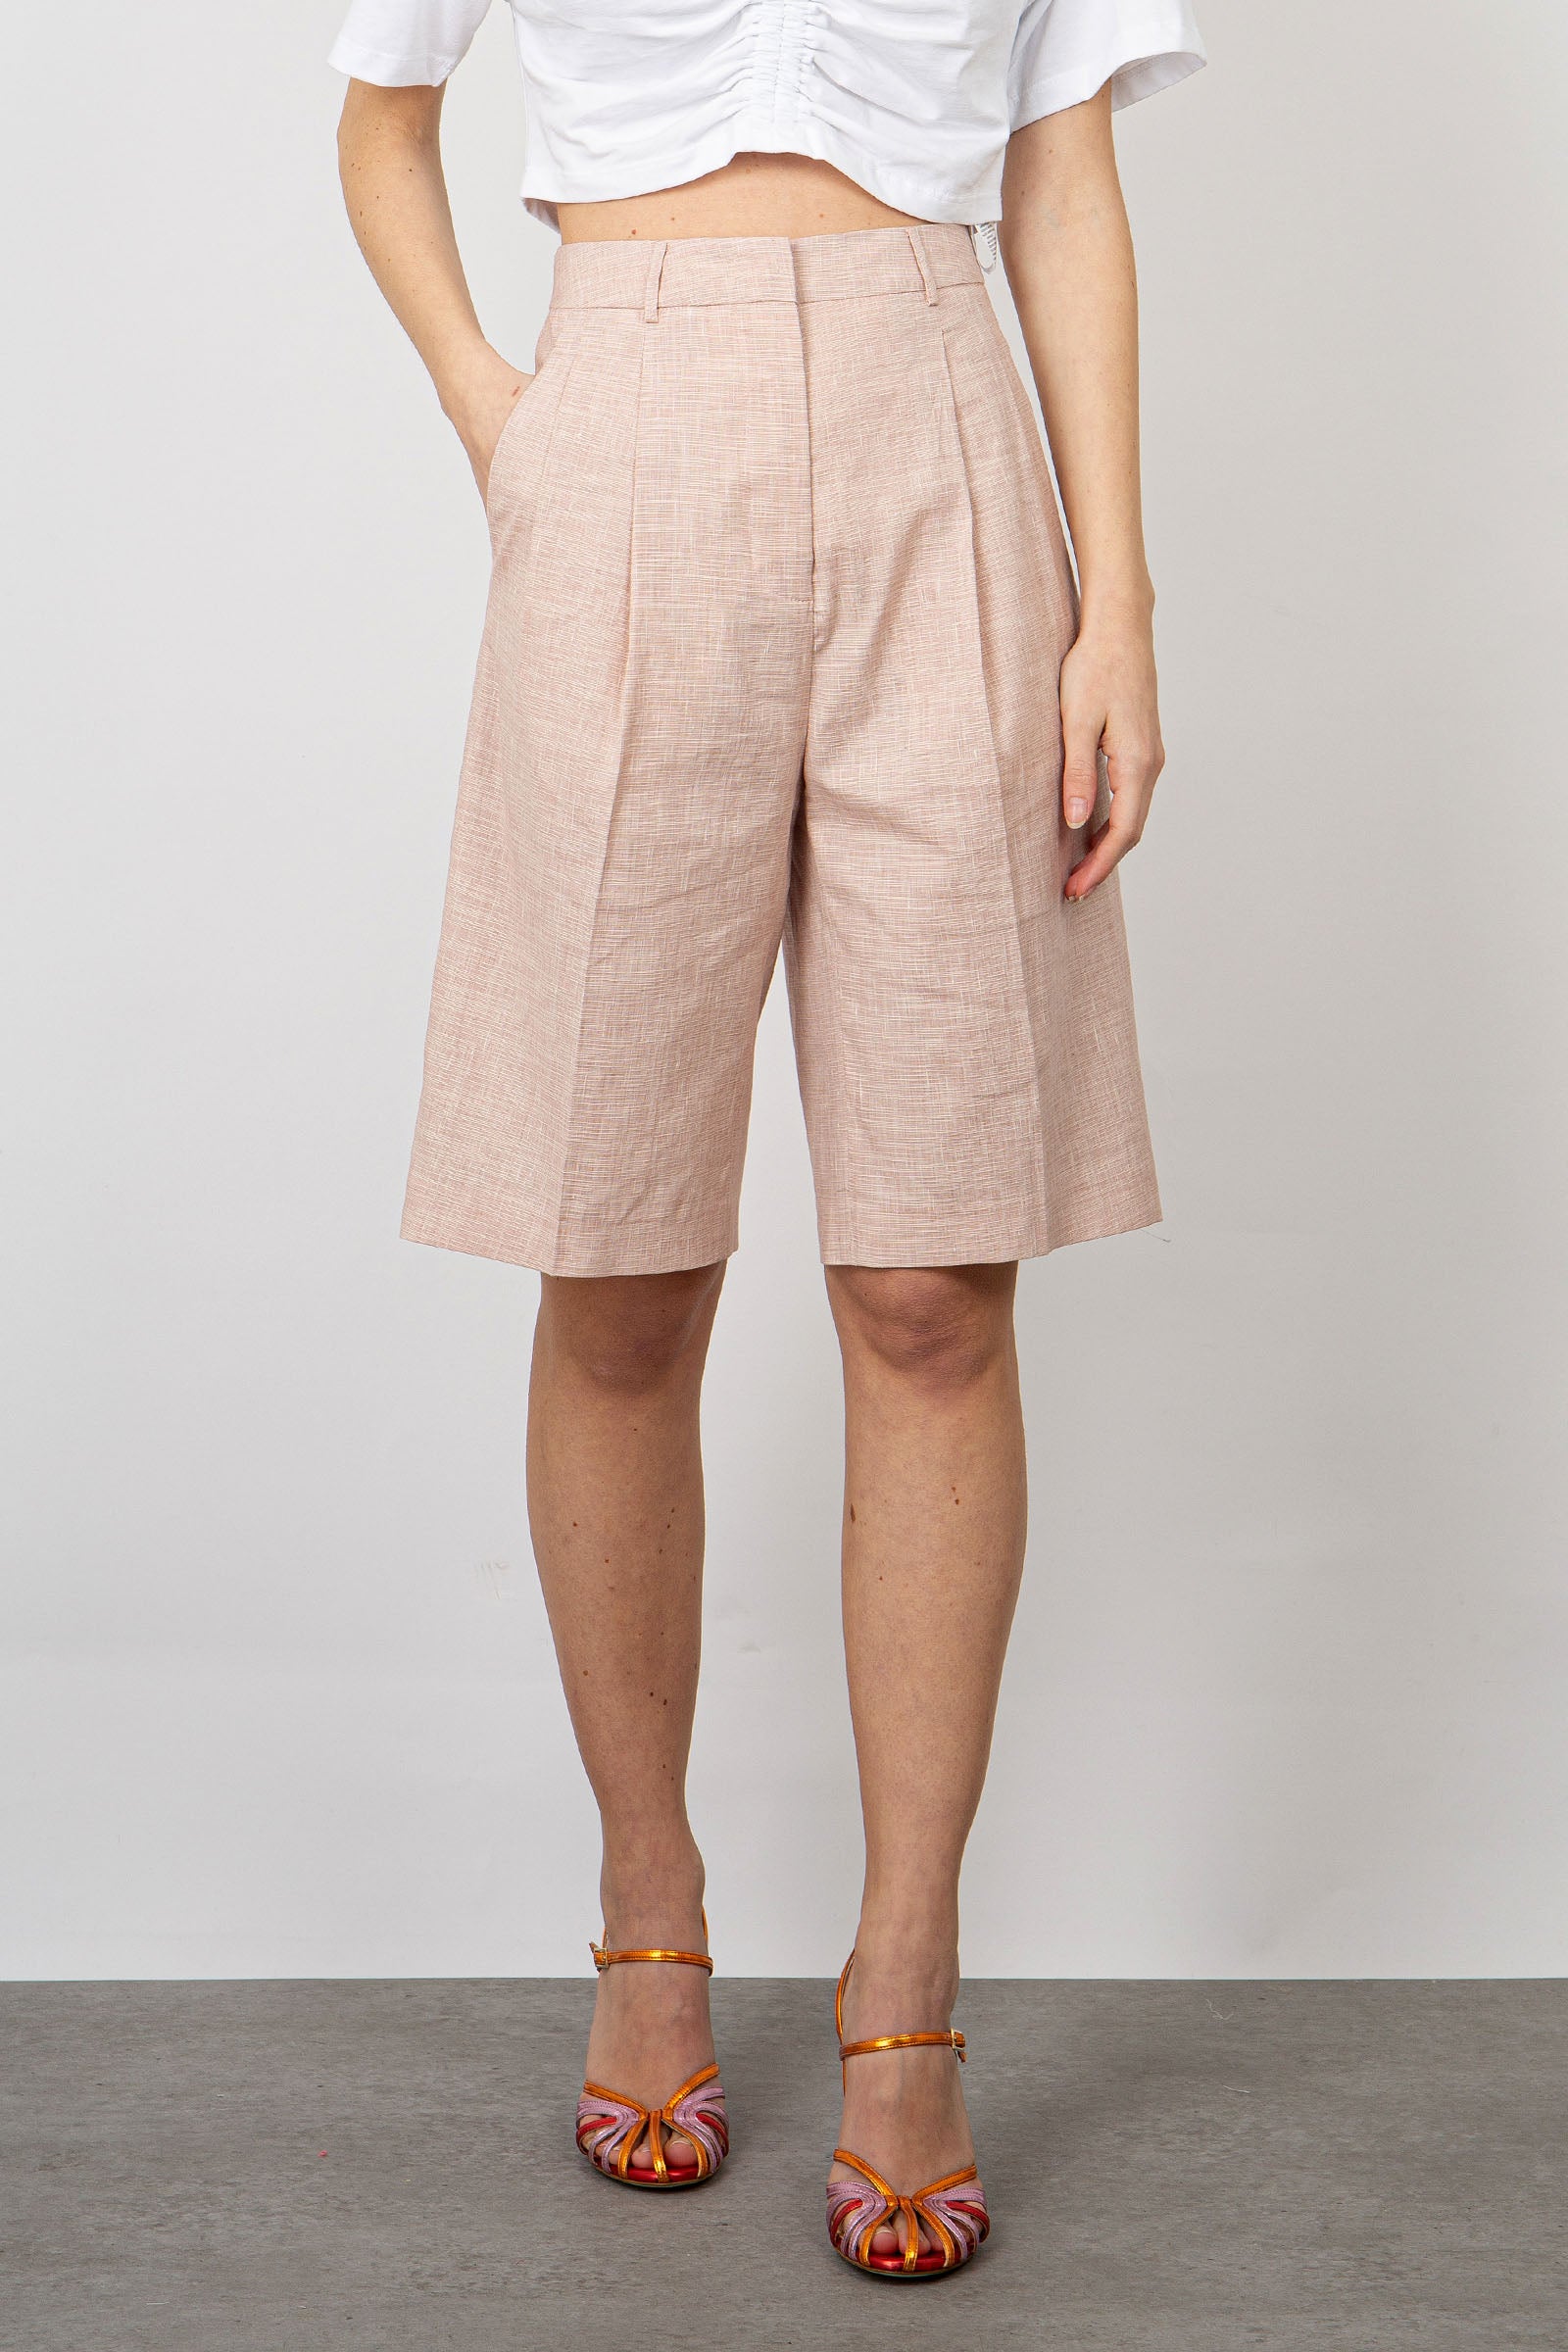 Semicouture Ellen Silk Bermuda Shorts in Light Pink - 5